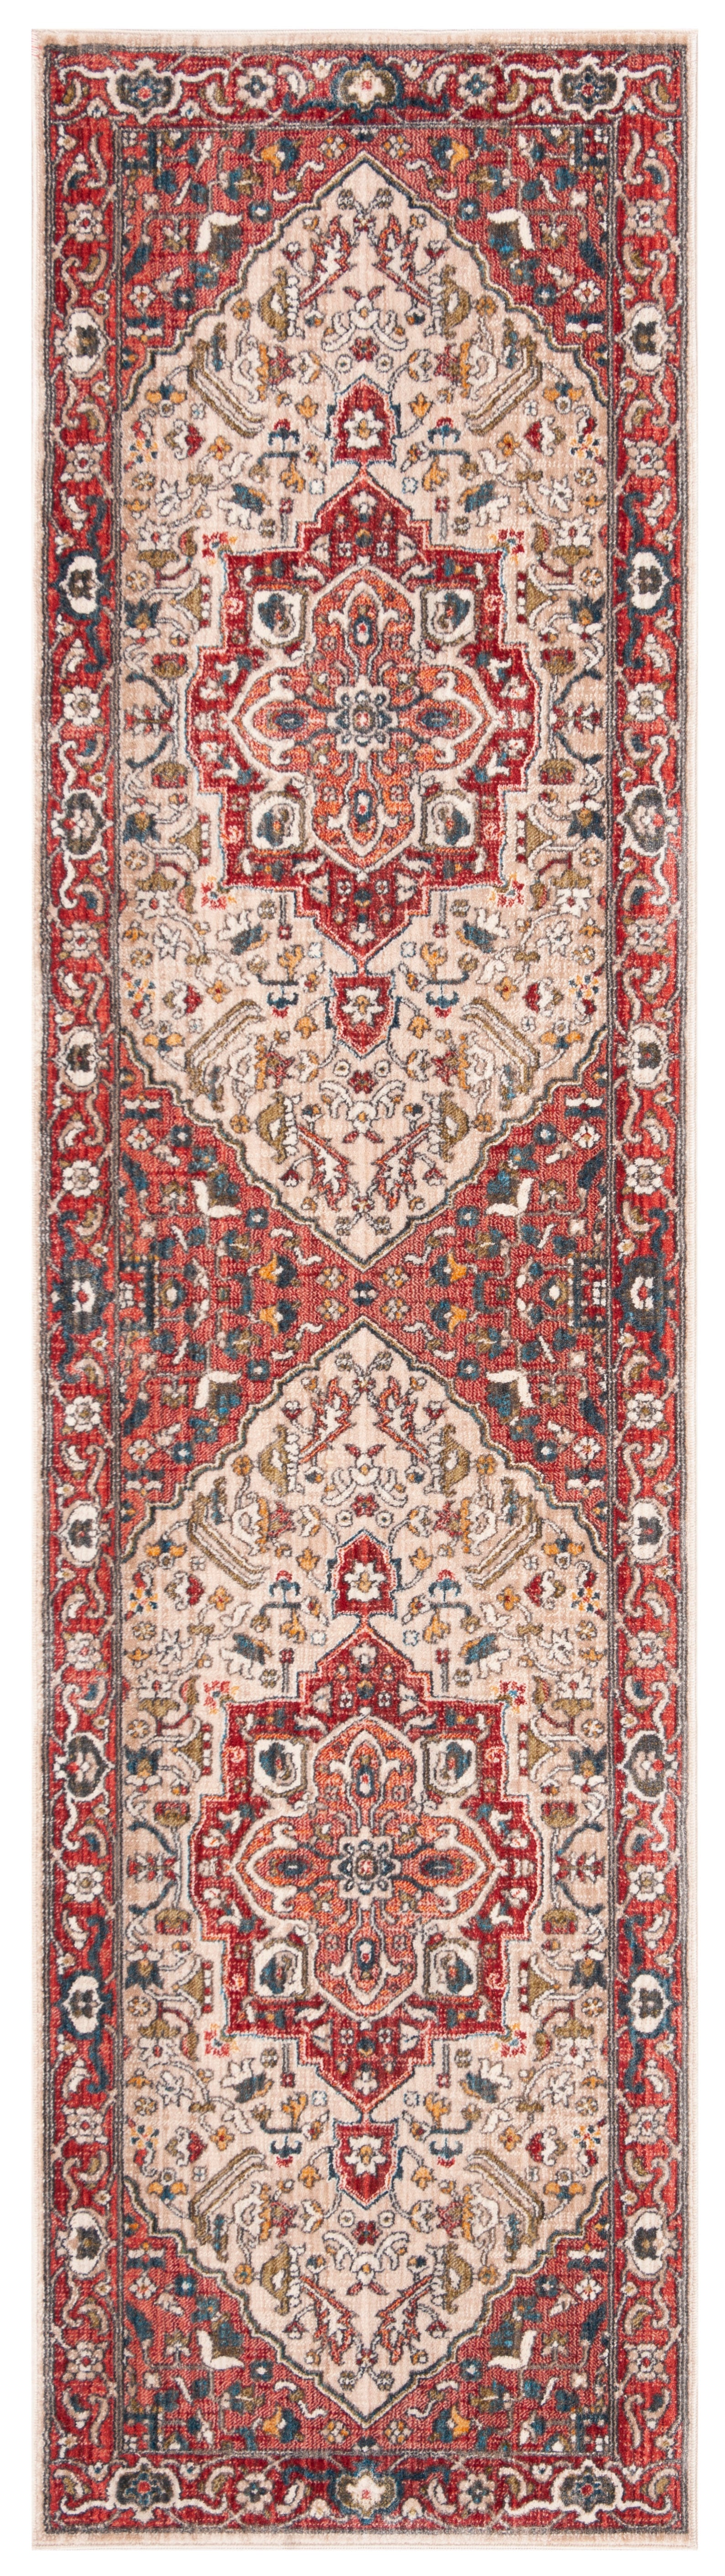 Safavieh Vintage Persian Vtp479A Red/Ivory Area Rug